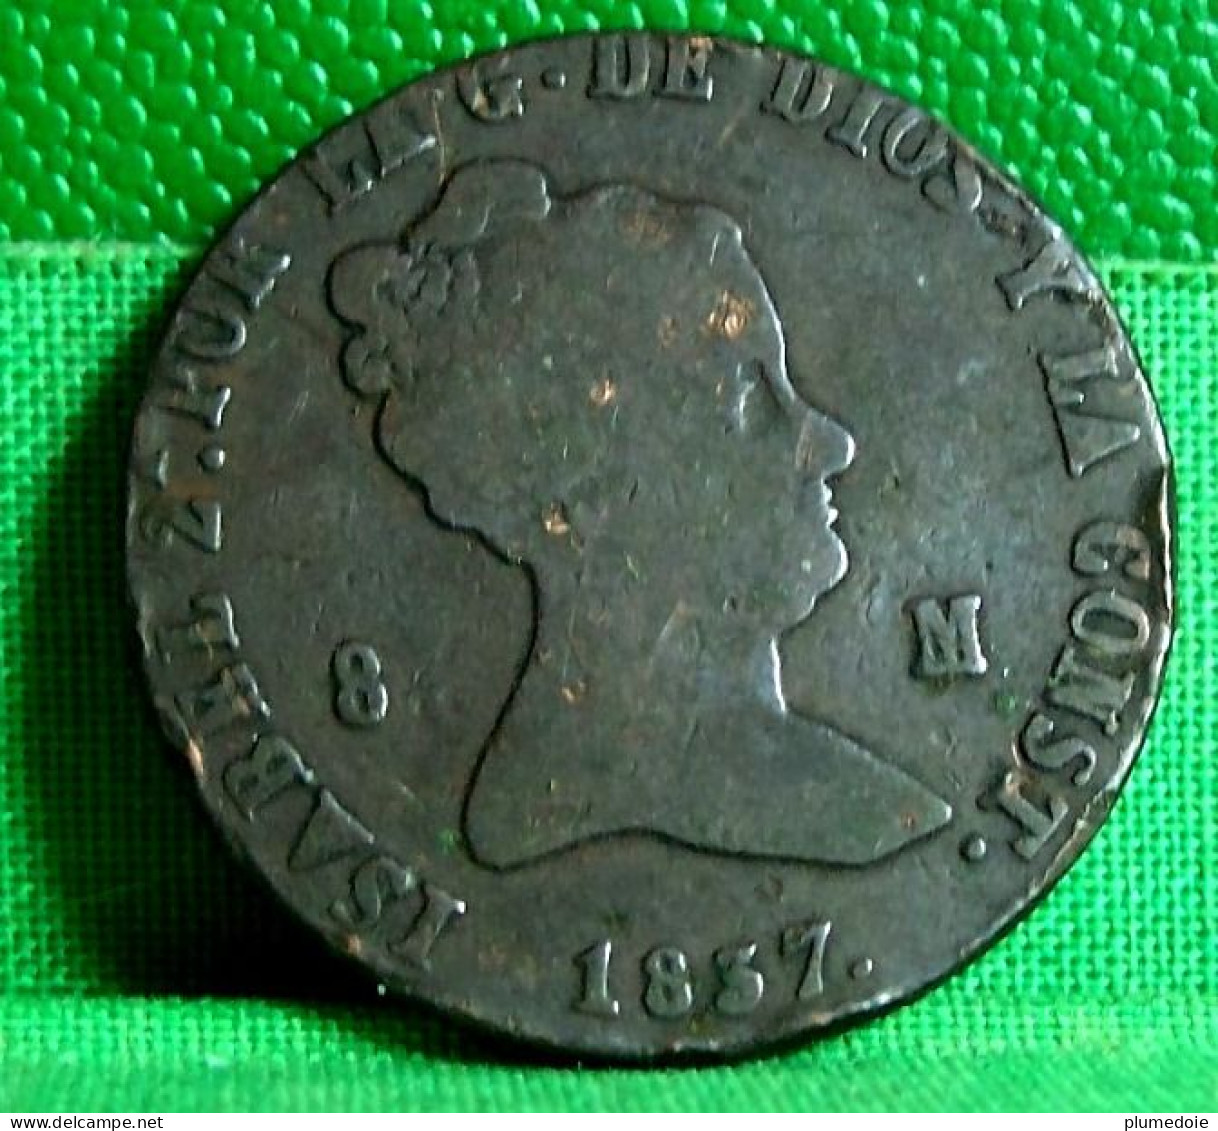 MONNAIE ESPAGNE 8 MARAVEDIS 1837 ISABEL II  , SPAIN OLD COIN  ISABEL 2 REINA DE LAS ESPANAS - Provincial Currencies